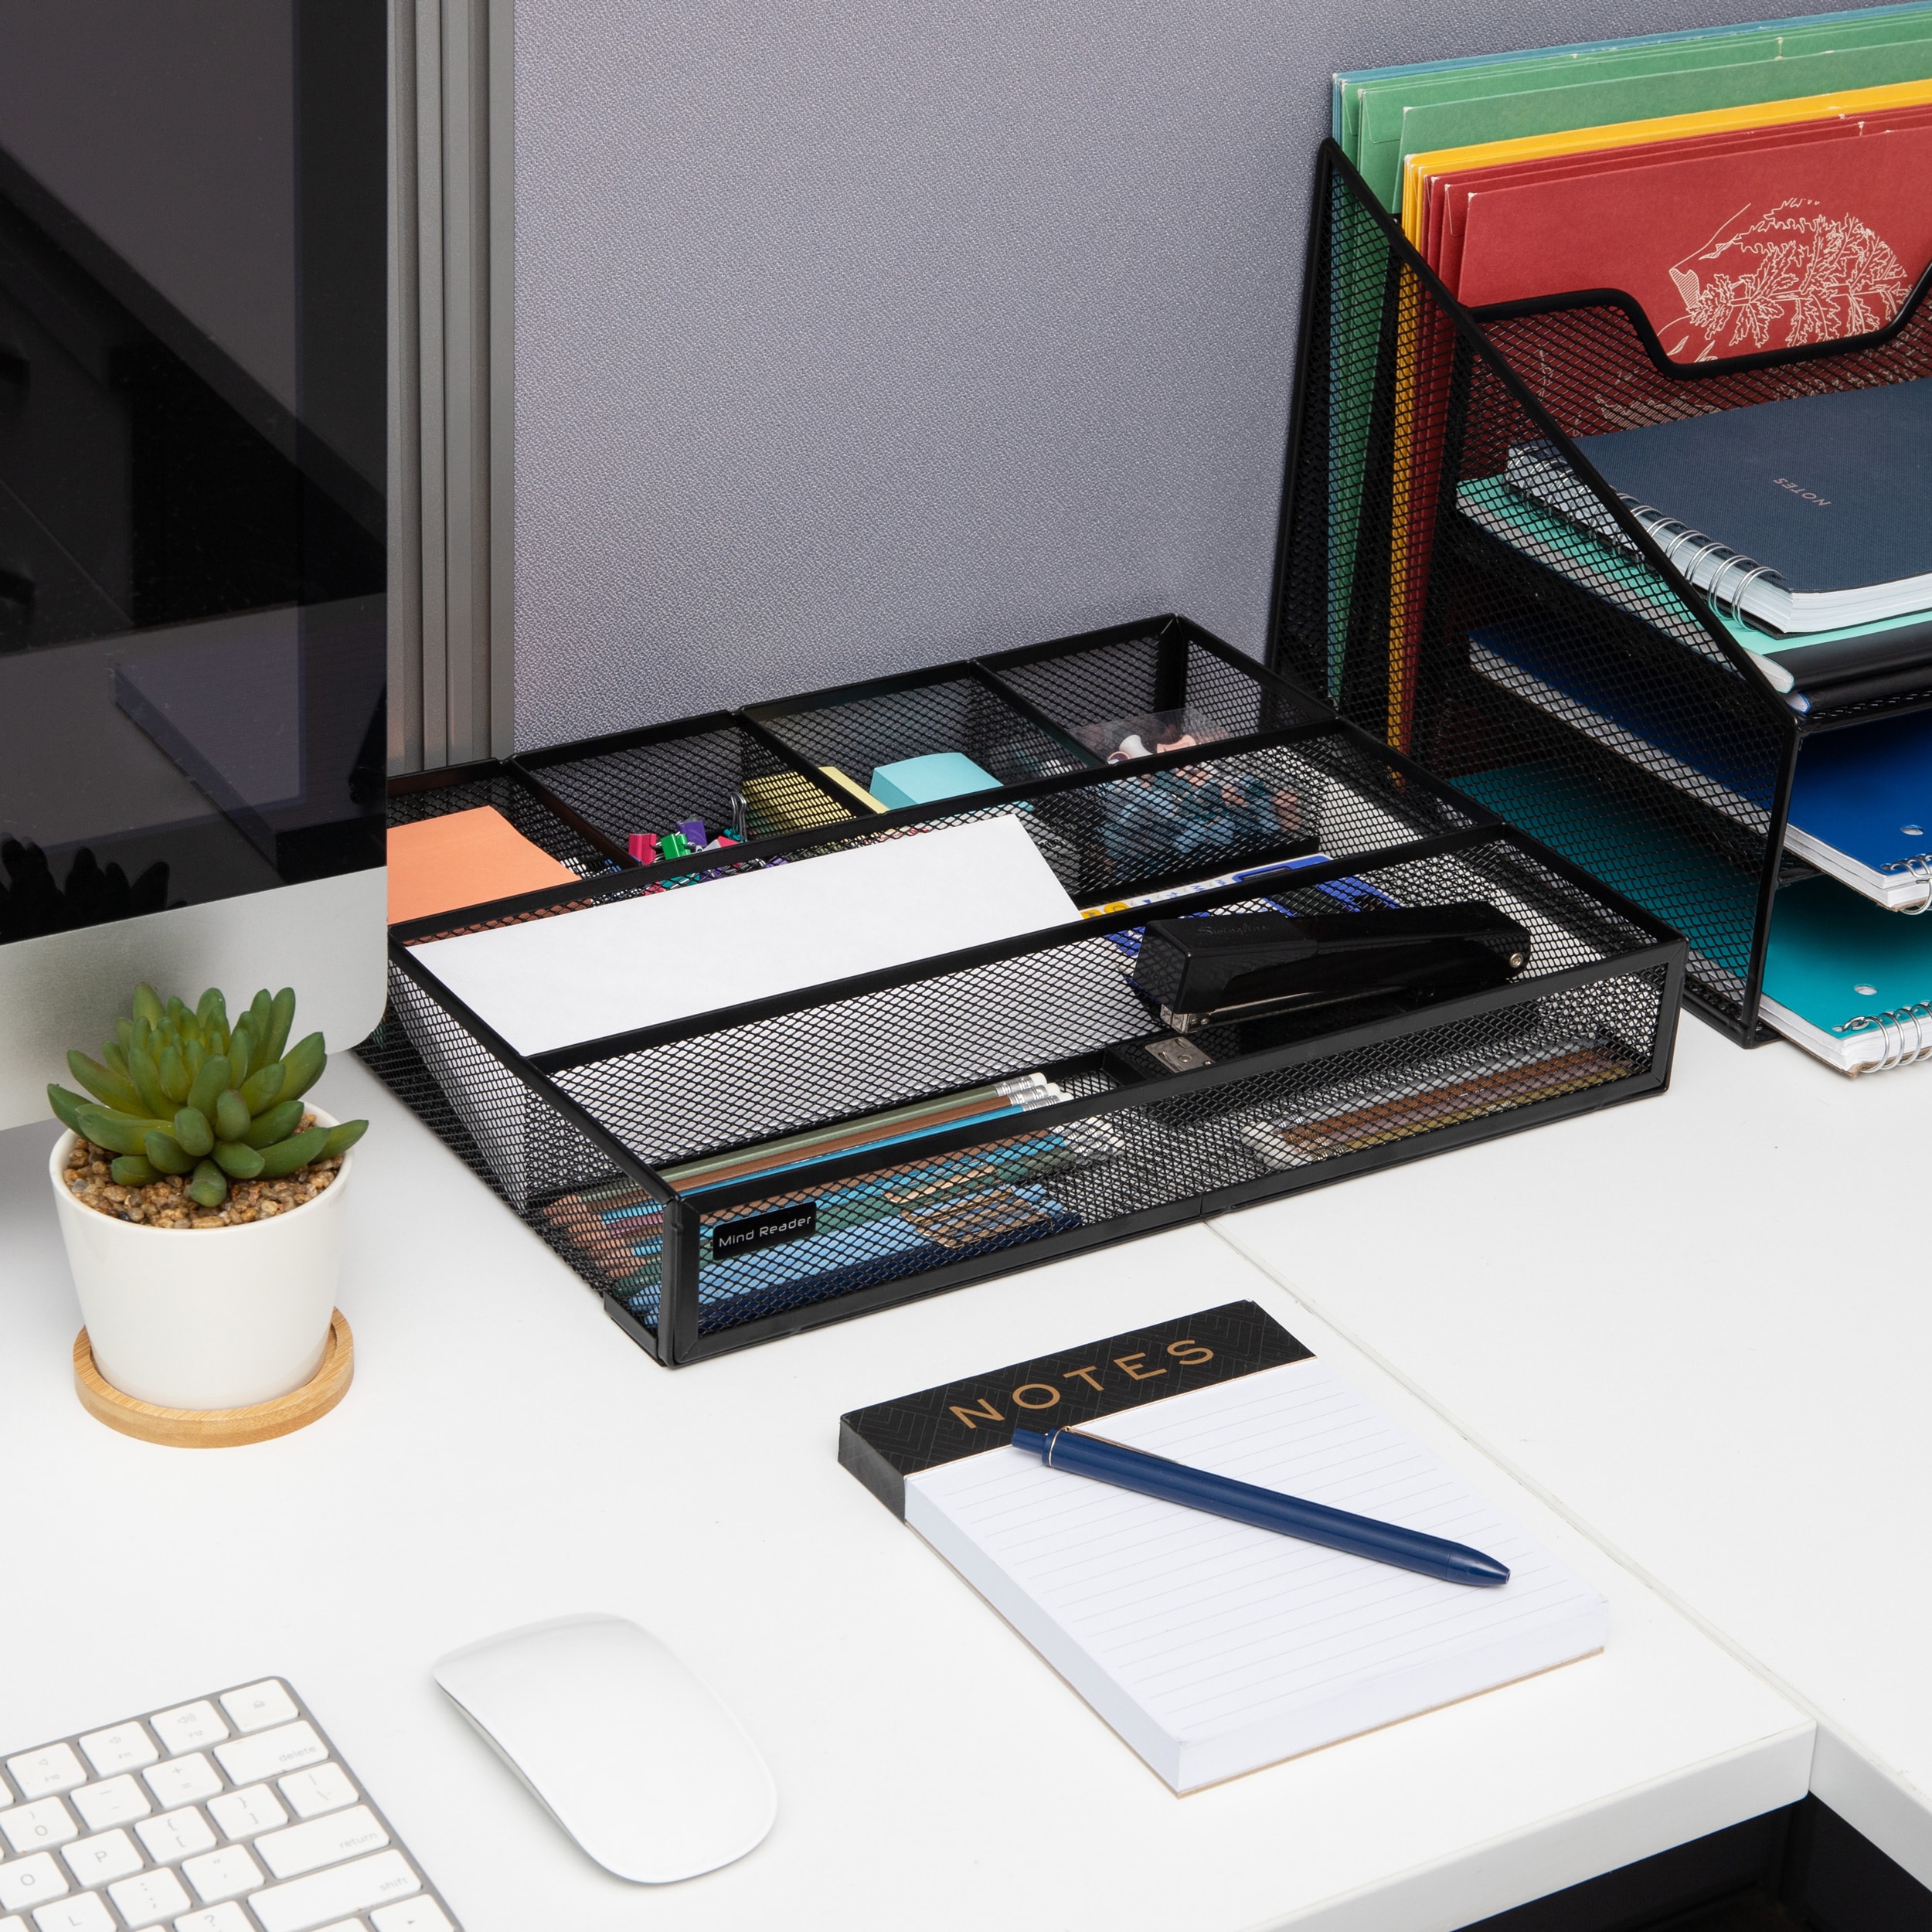  Under Desk Drawer Organizer Clamp-On, Mesh Metal Desk Drawer  Attachment, 1 Drawer Slide Out, On Desk Or Under Desk Organizer For Office  Supplies & Home Essentials : Office Products